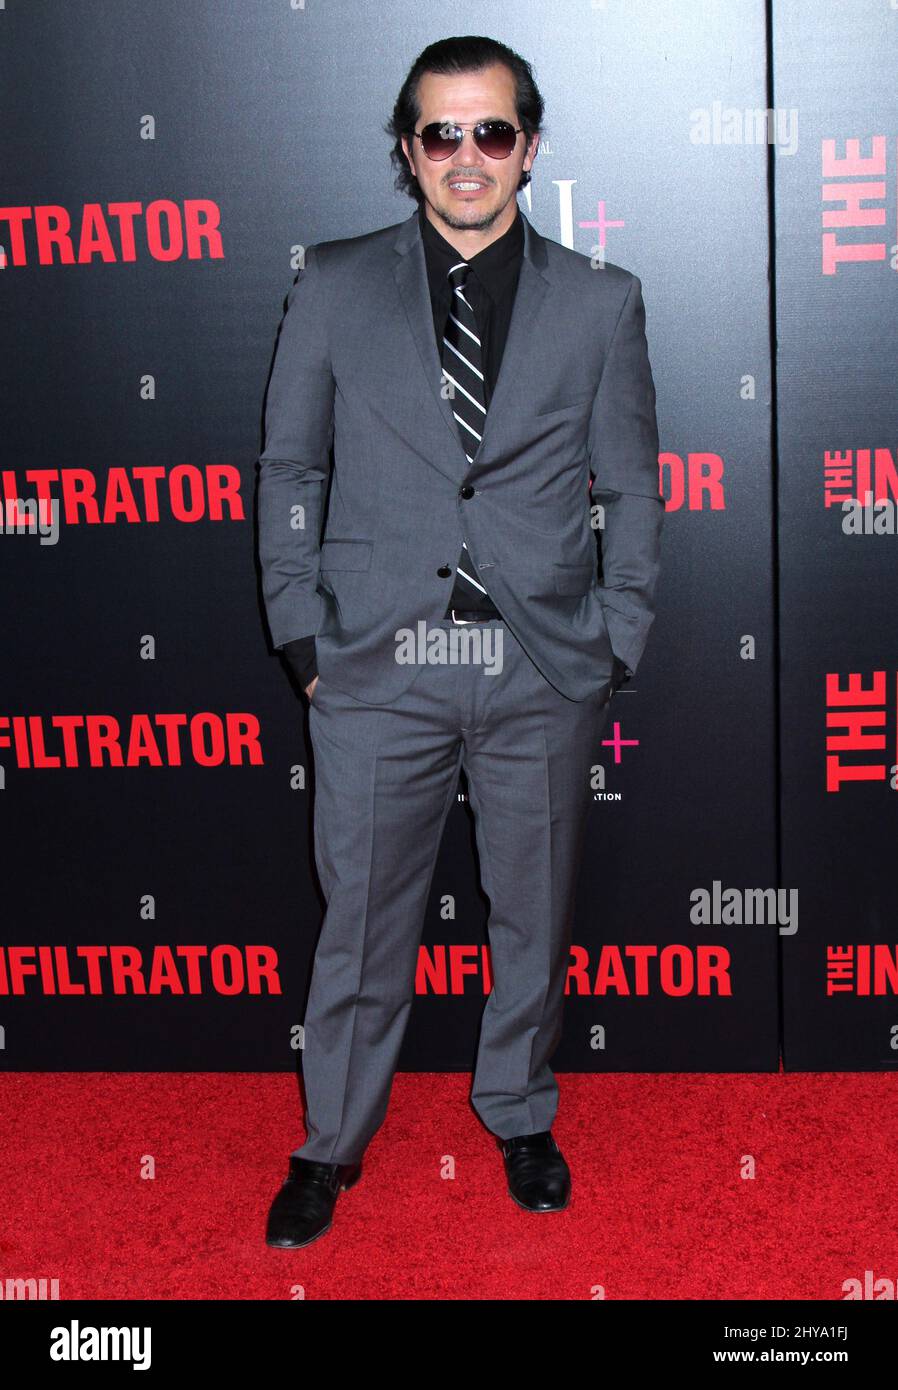 John Leguizamo attending the premiere of The Infiltrator in New York. Stock Photo